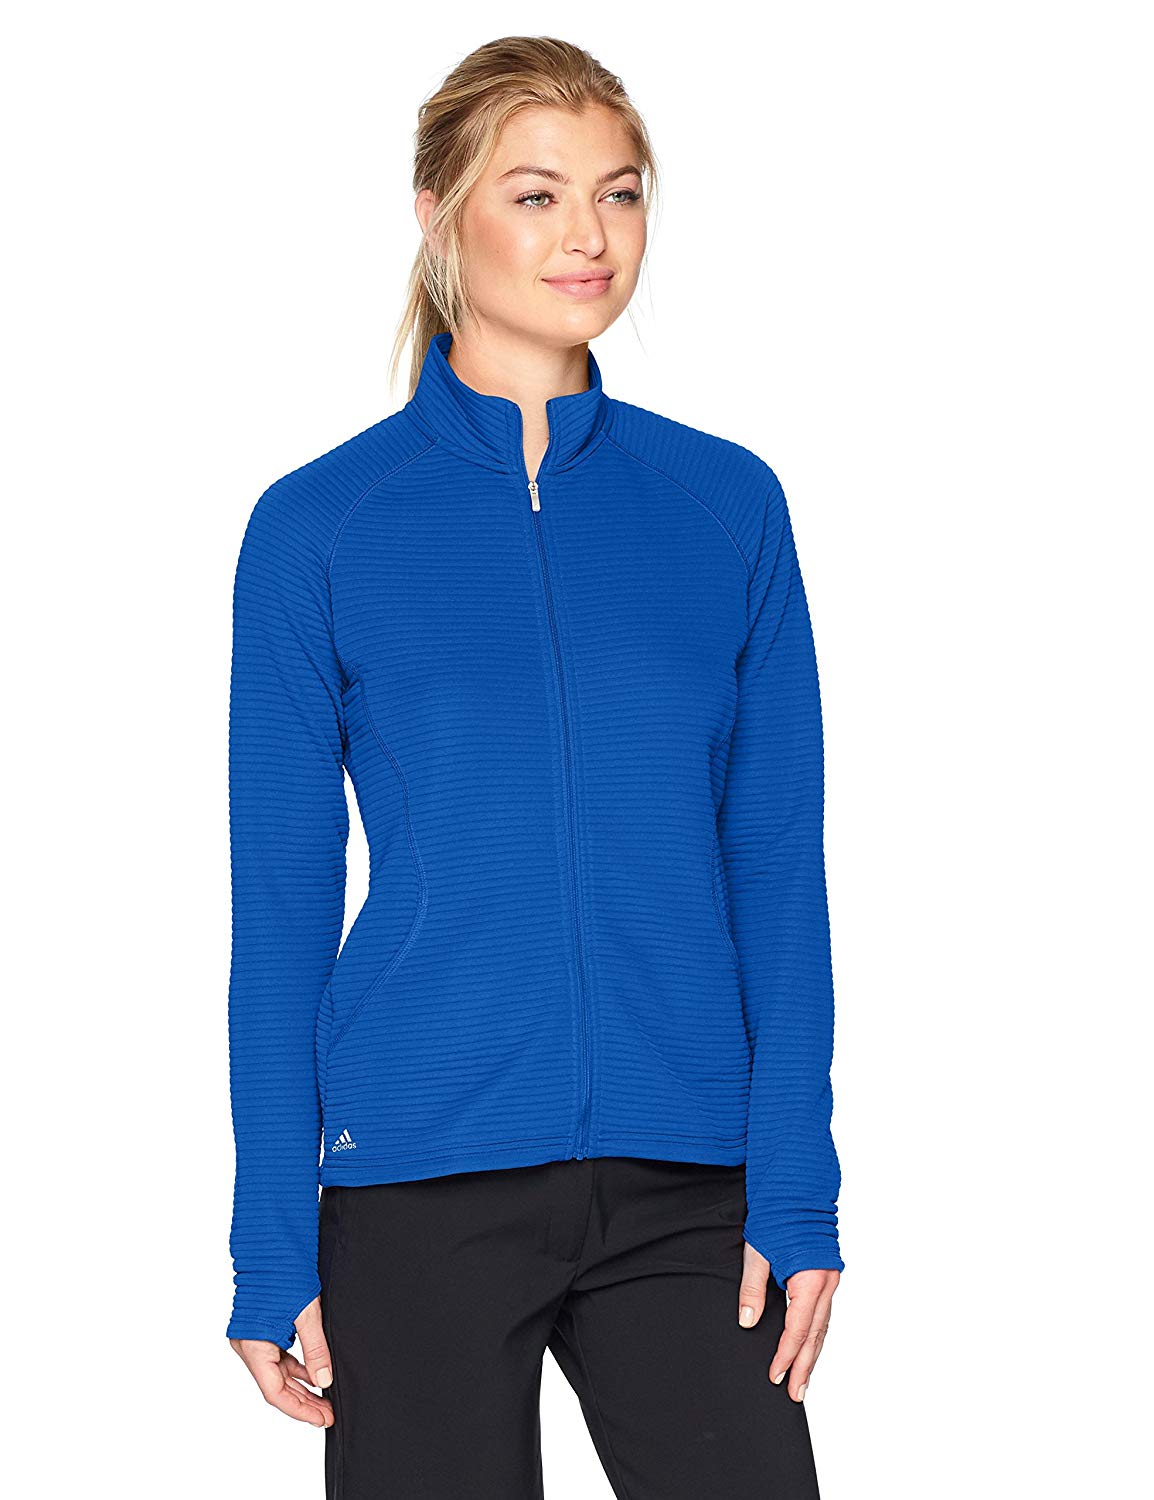 Womens Adidas Essential Textured Golf Jackets